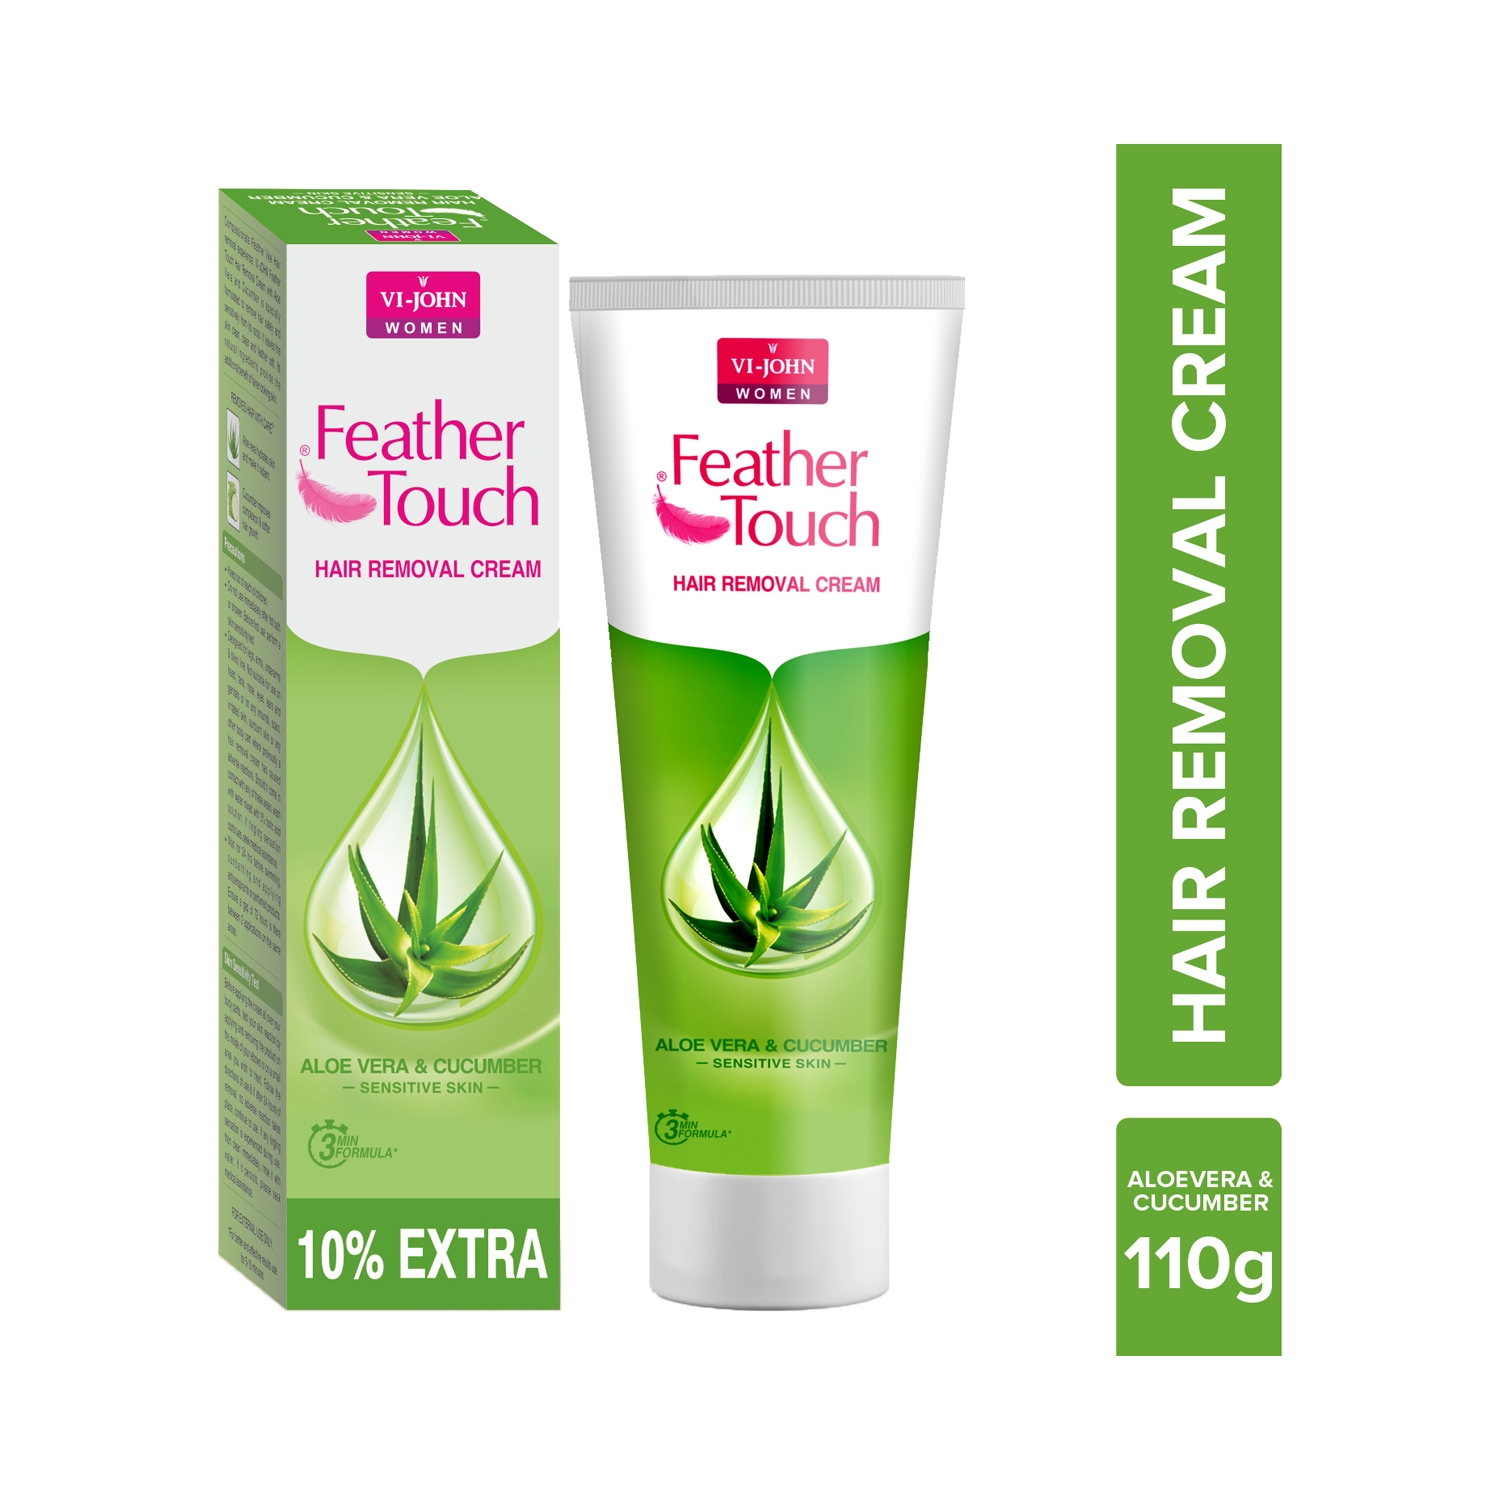 VI-JOHN | VI-JOHN Feather Touch Hair Removal Cream With Cucumber & Aloe Vera Tube For Sensitive Skin (110g)